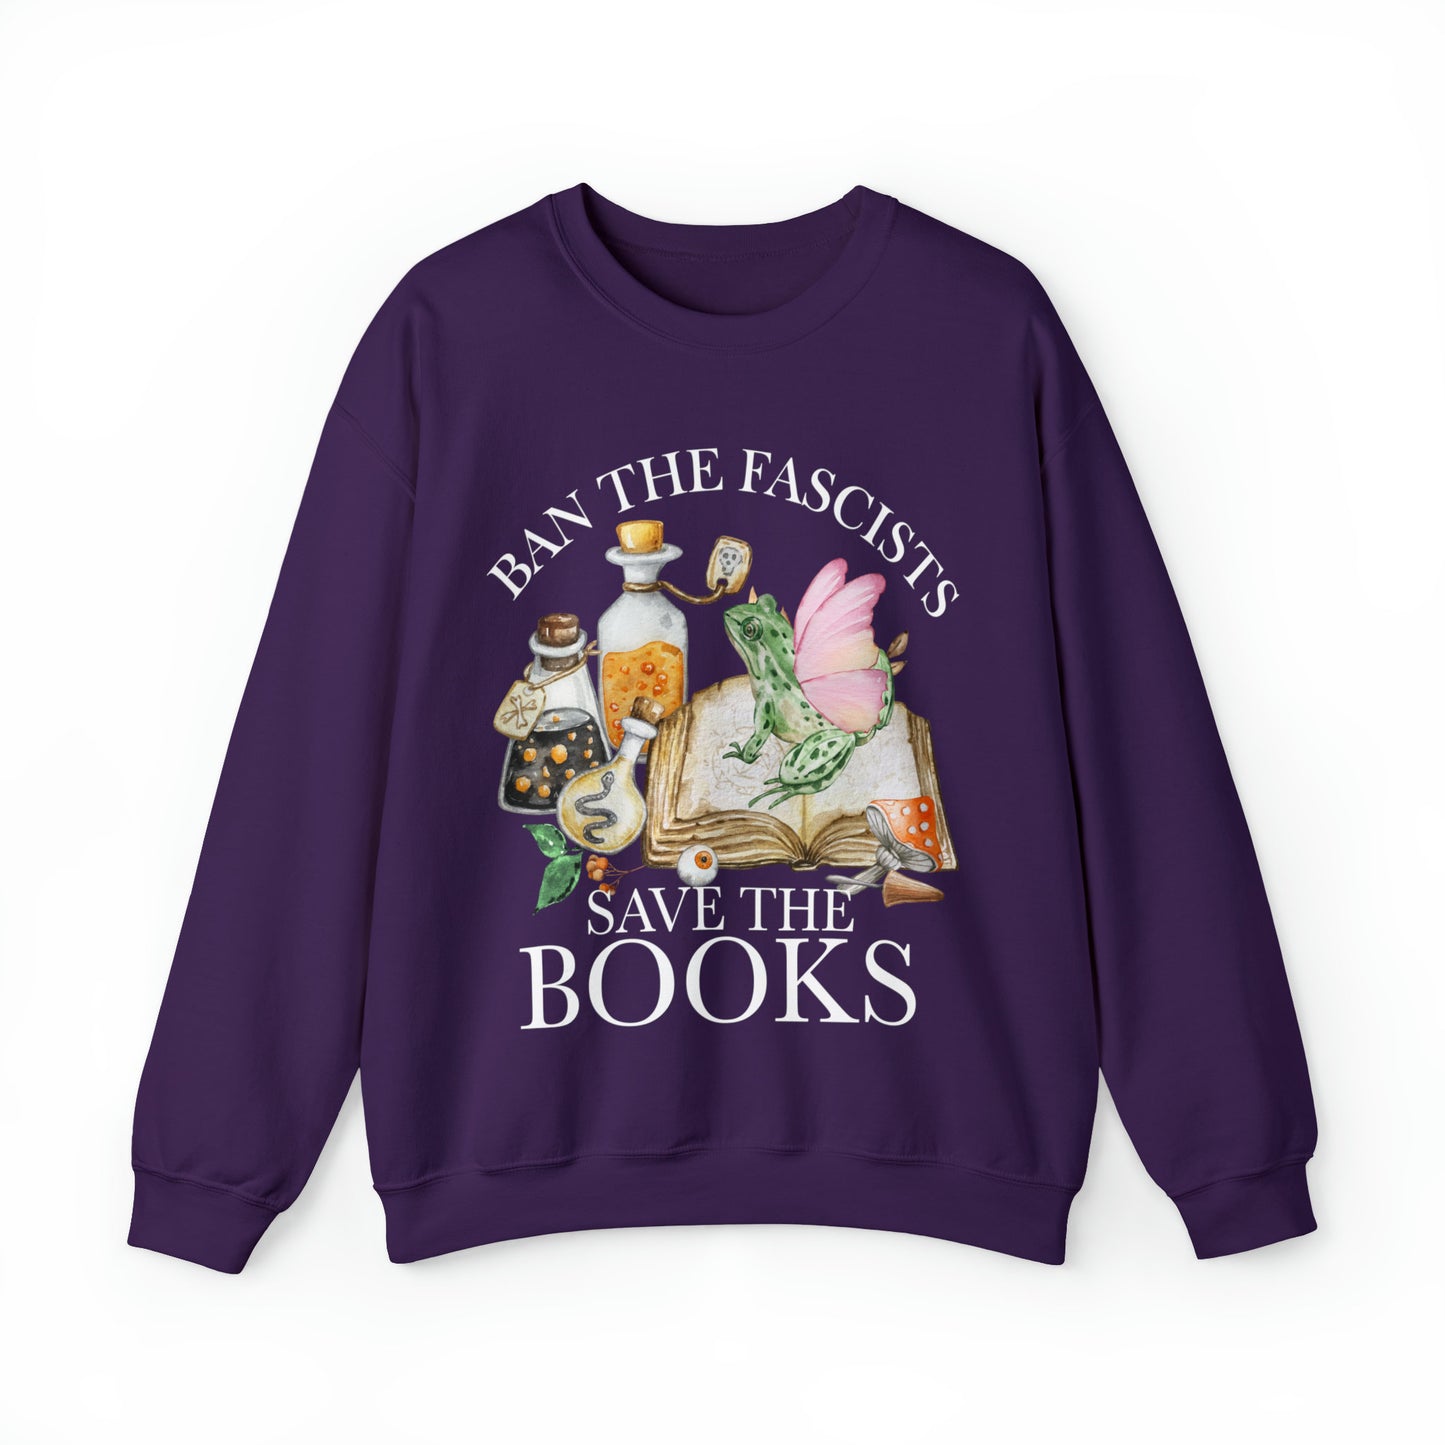 Ban the fascists save the books sweatshirt